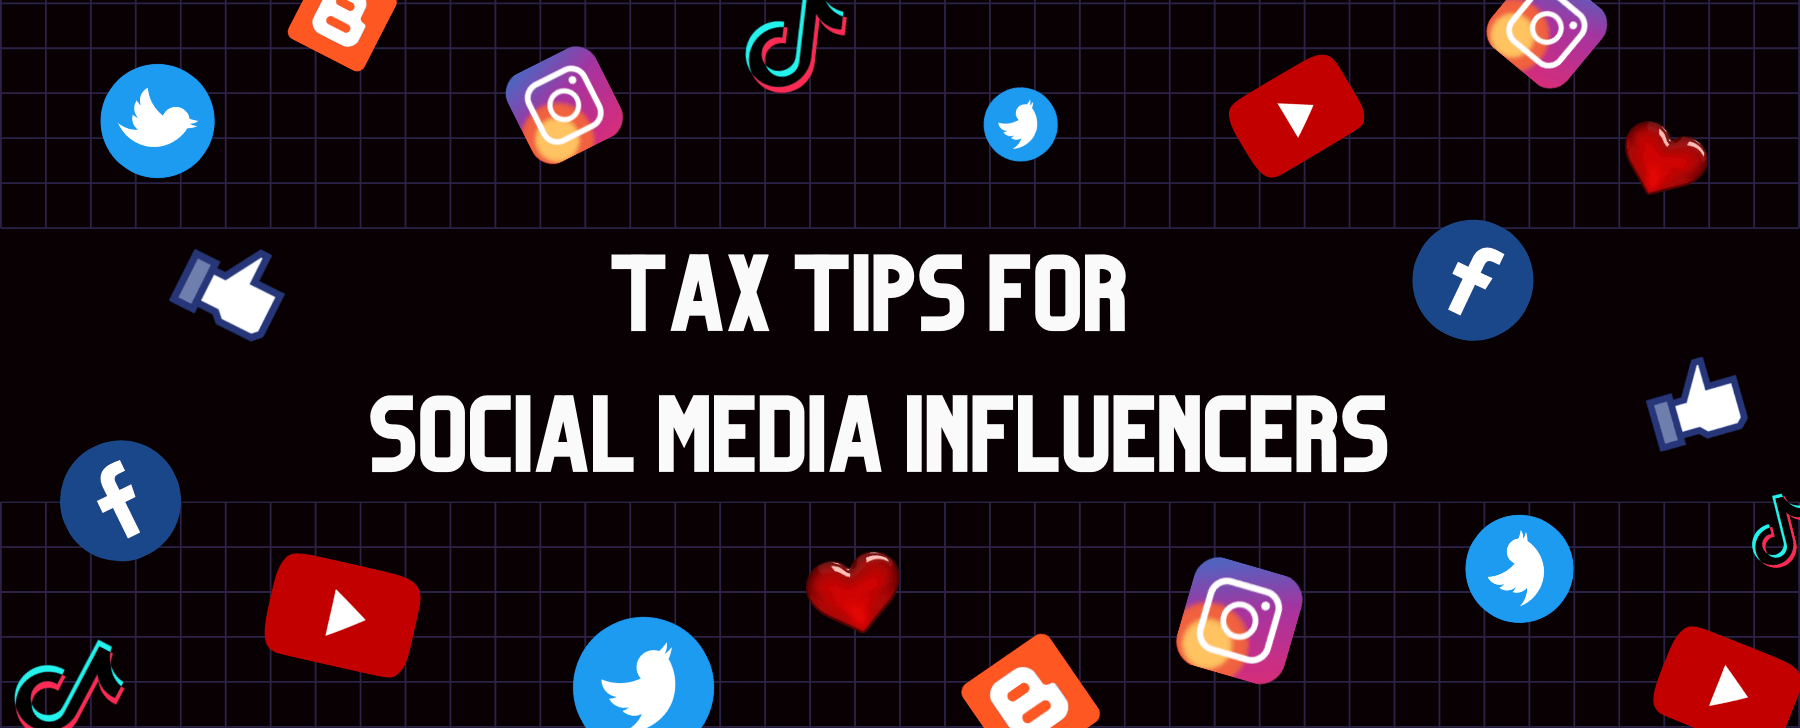 Tax Tips for Social Media Influencers - blog image